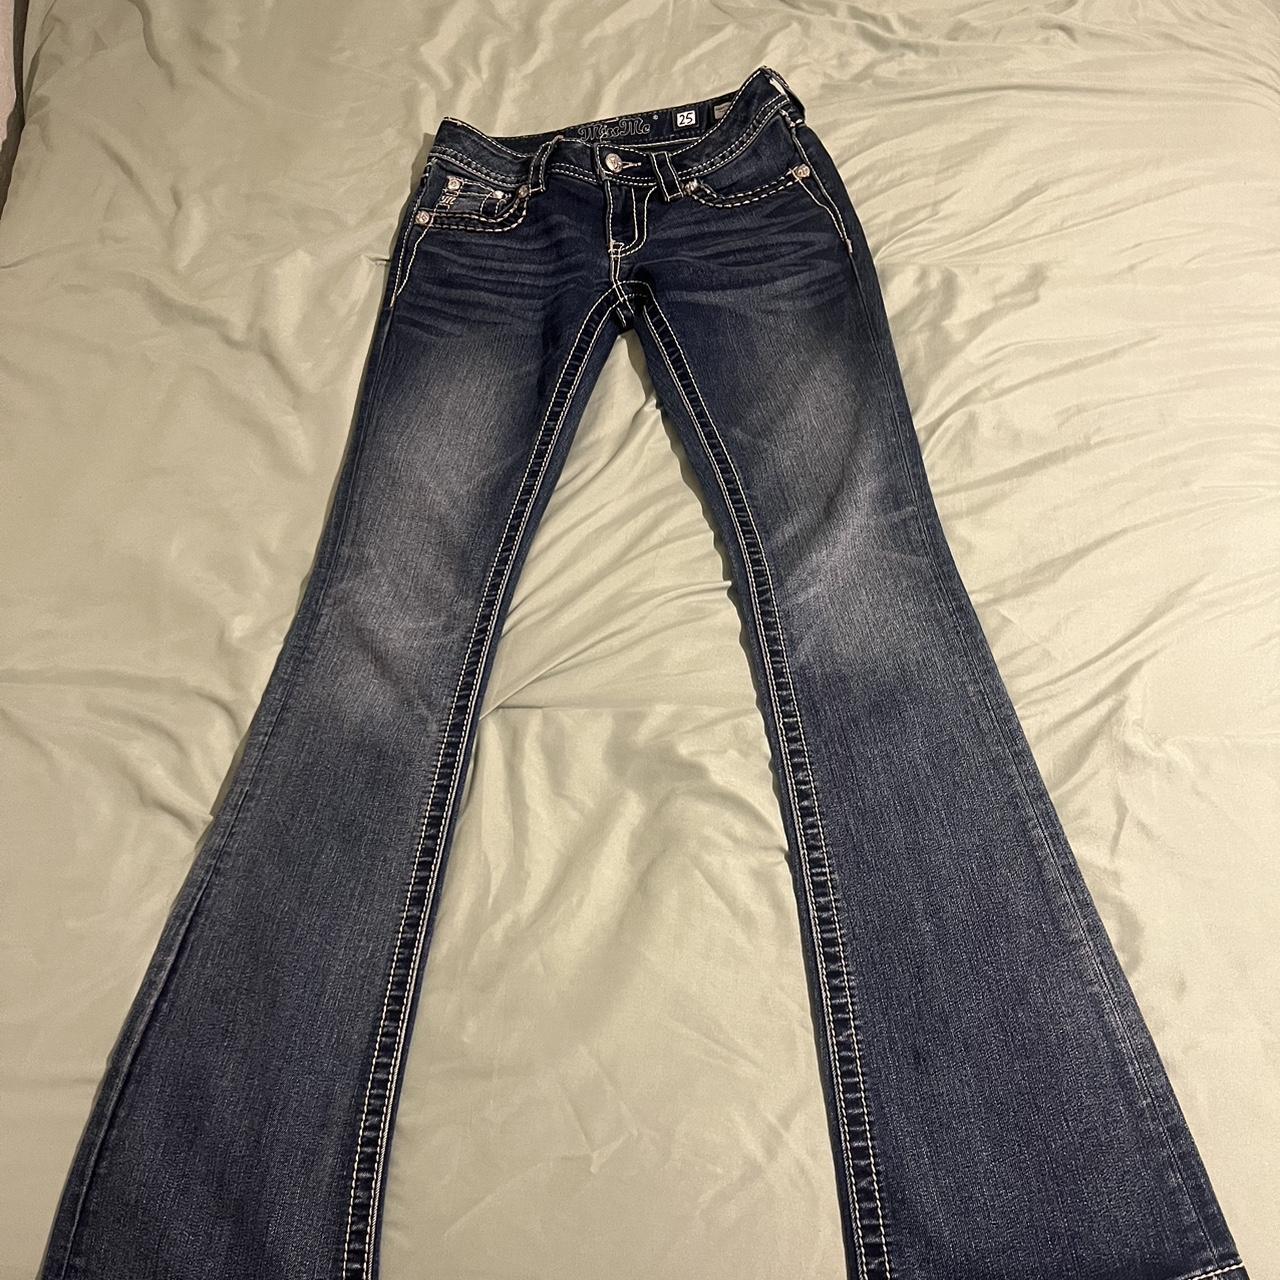 Miss me jeans waist - 25